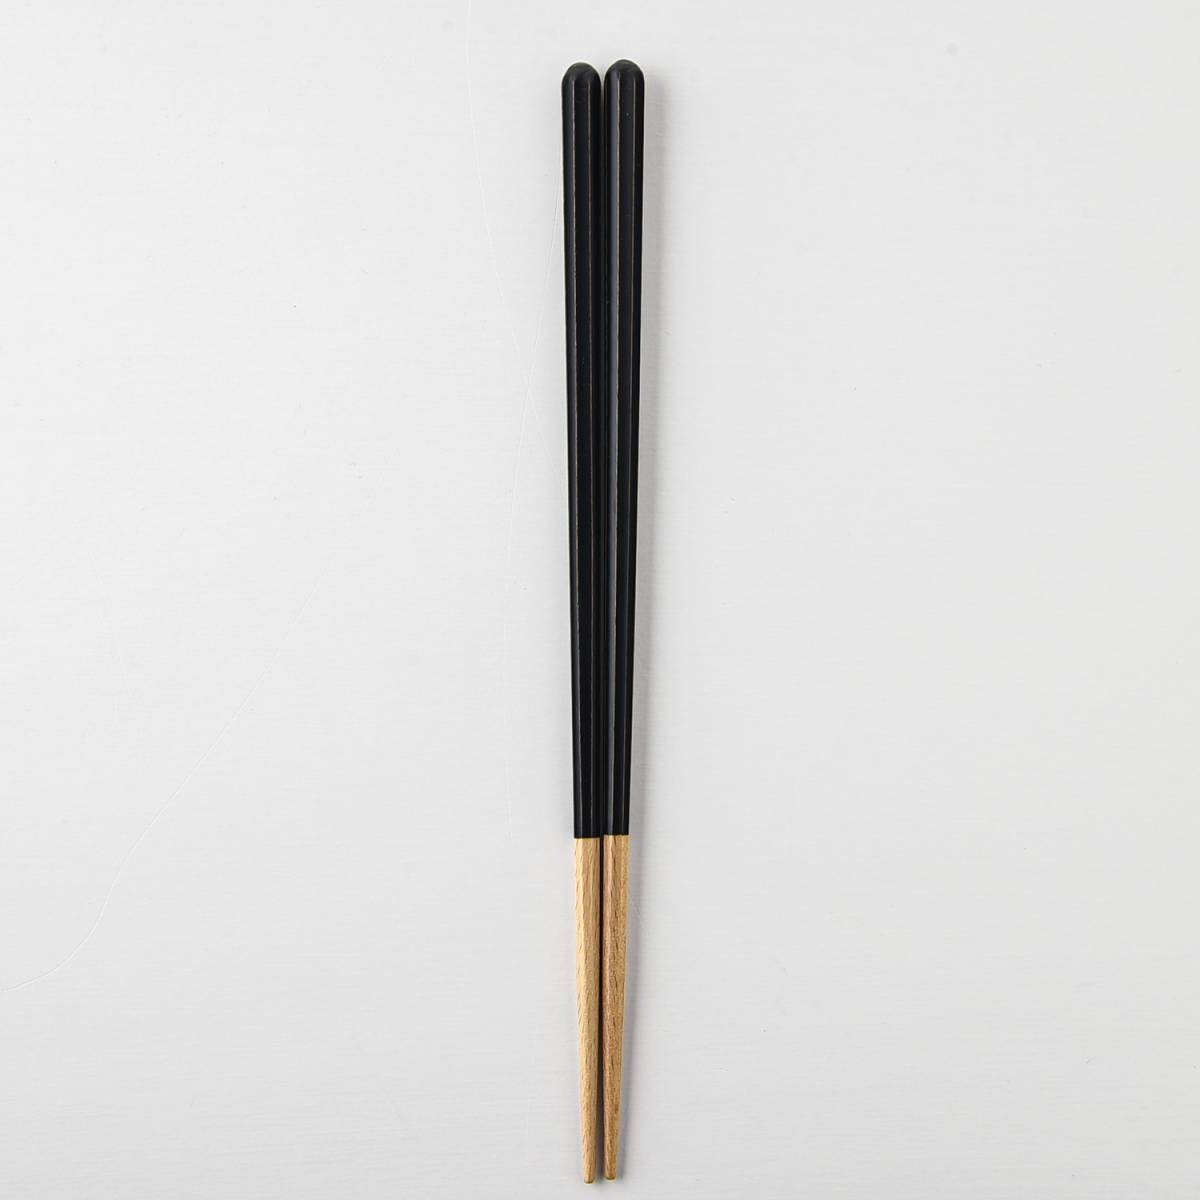 Haze日本筷子 - 黑色 Haze Japan Chopsticks - Black